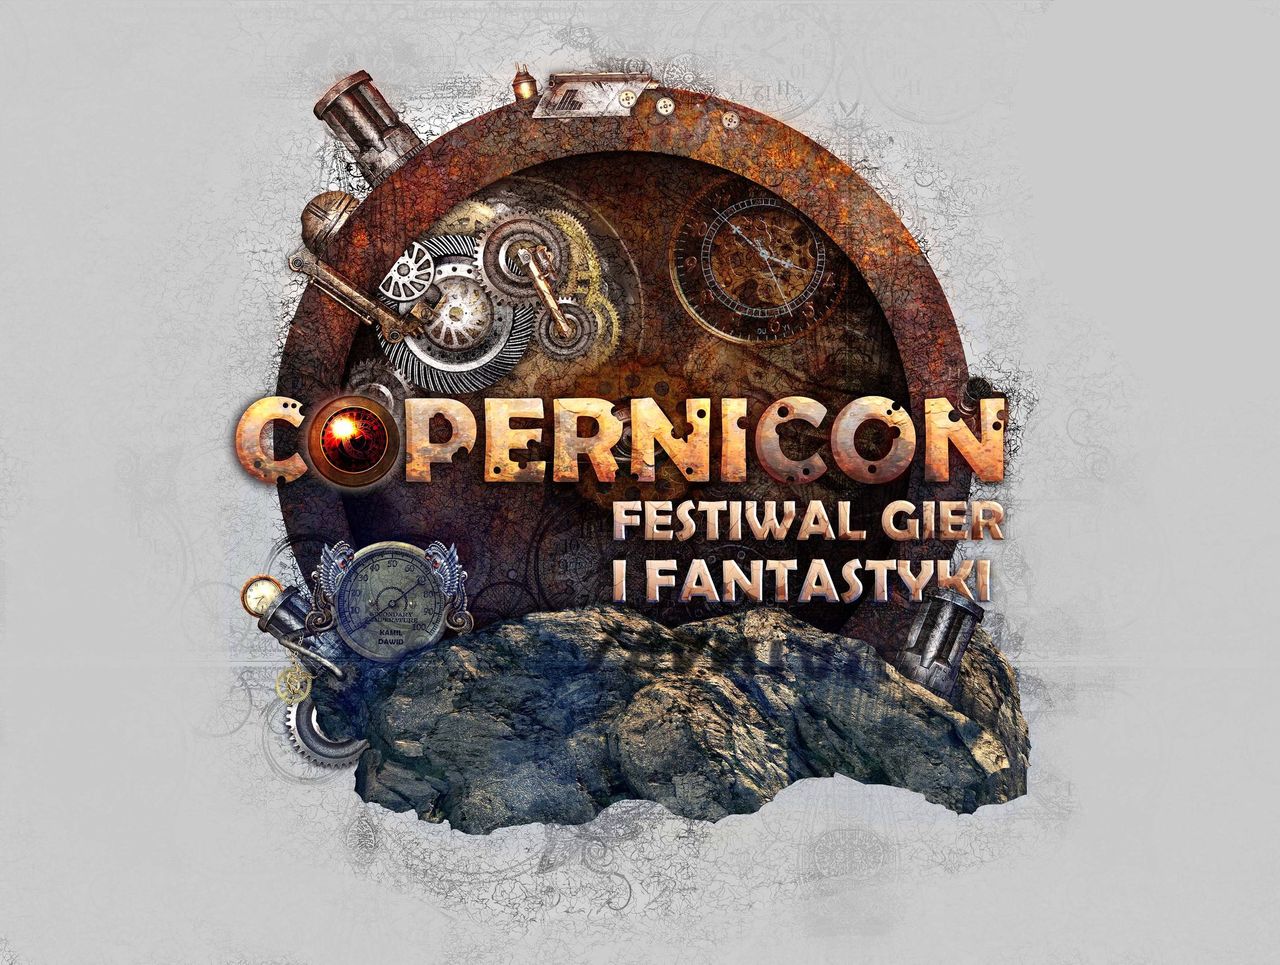 Festiwal Gier i Fantastyki Copernicon 2011 już w najbliższy weekend